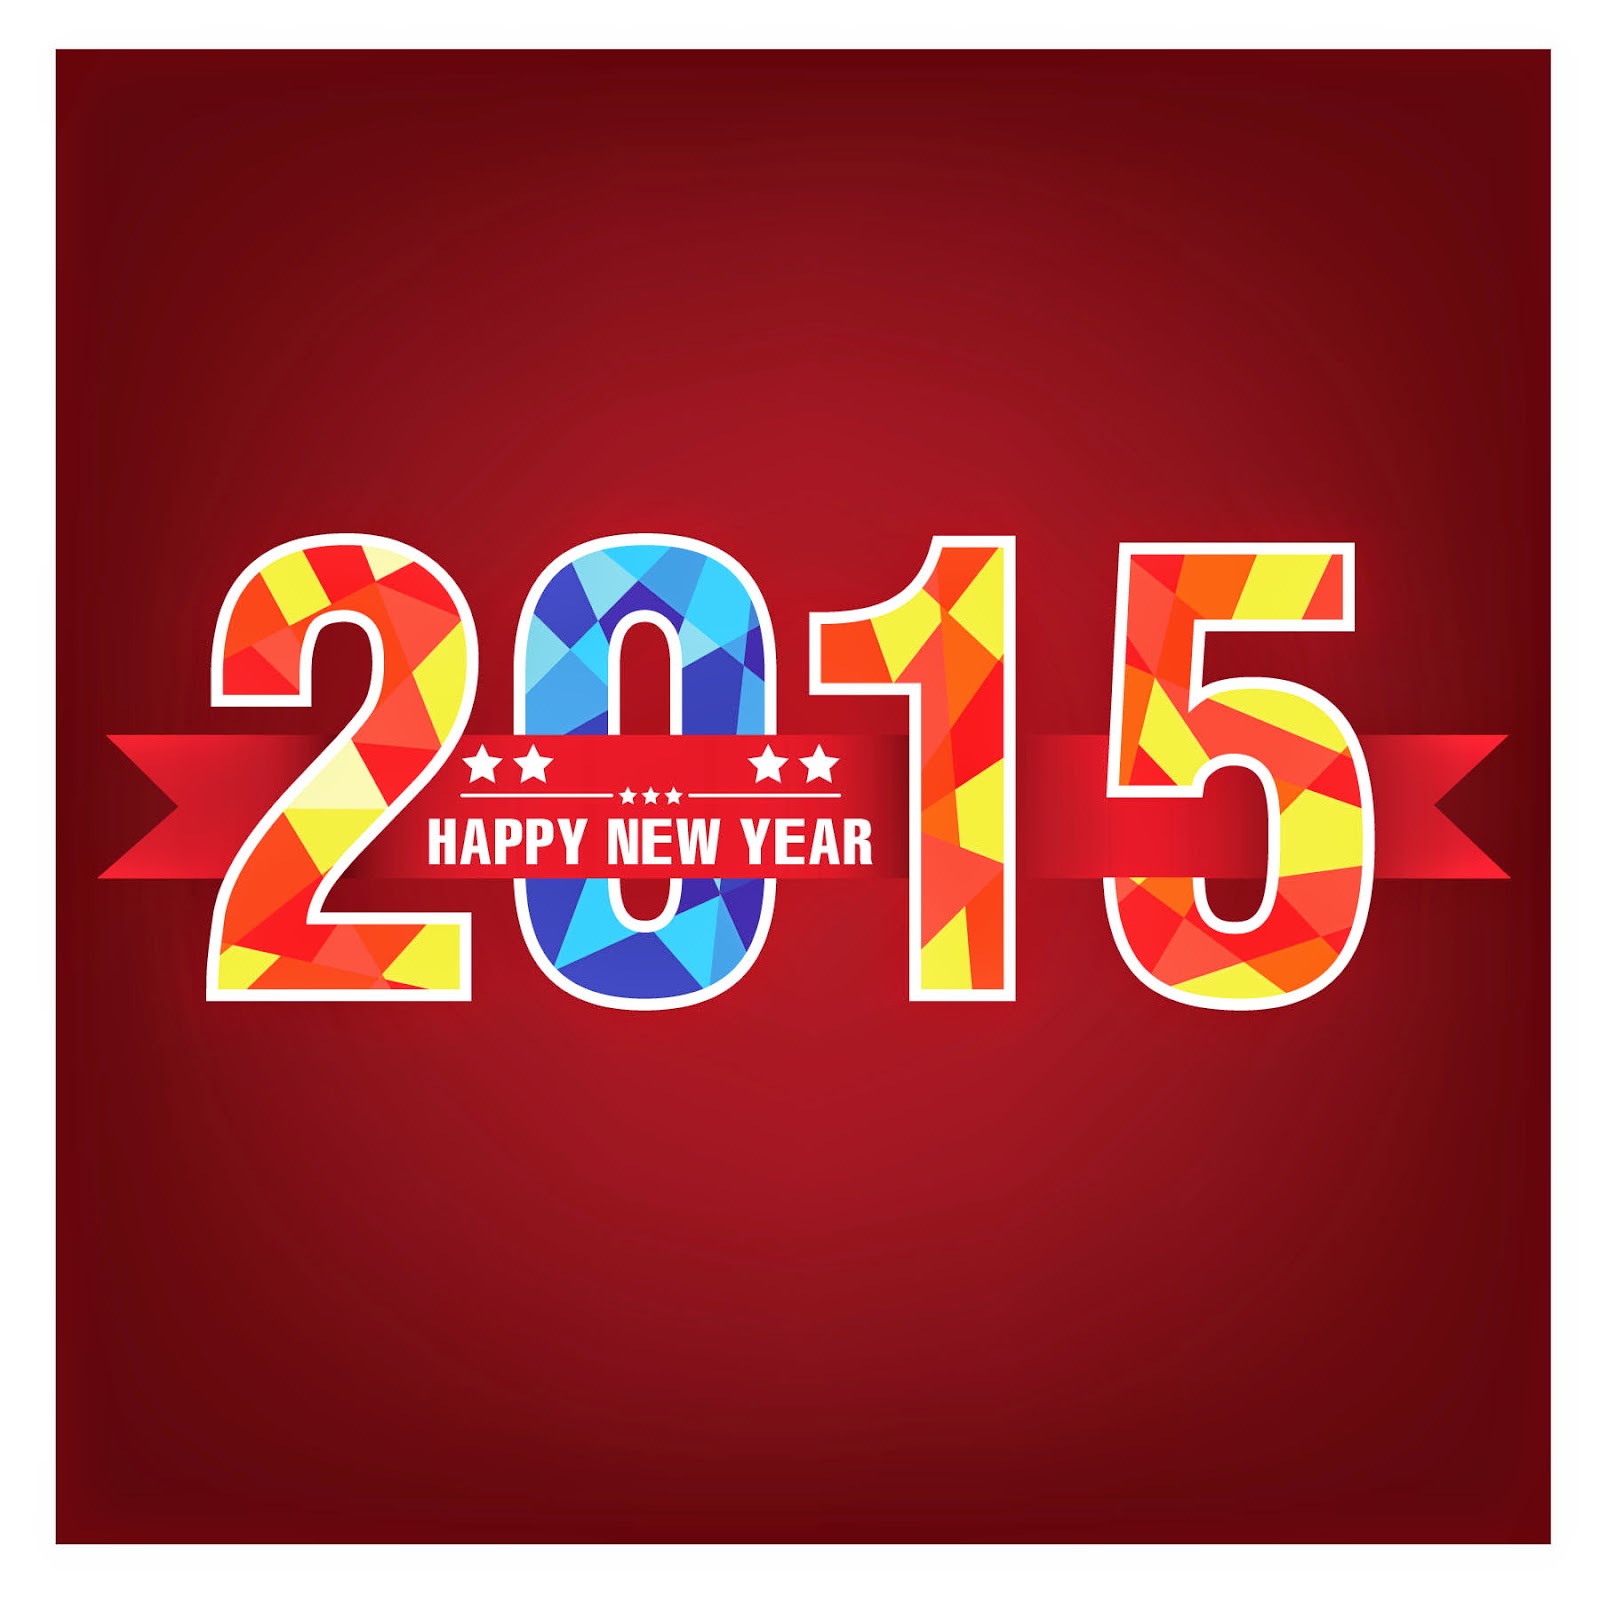 Clipart Happy New Year 2015 Happy New Year 2015 Digital Greeting